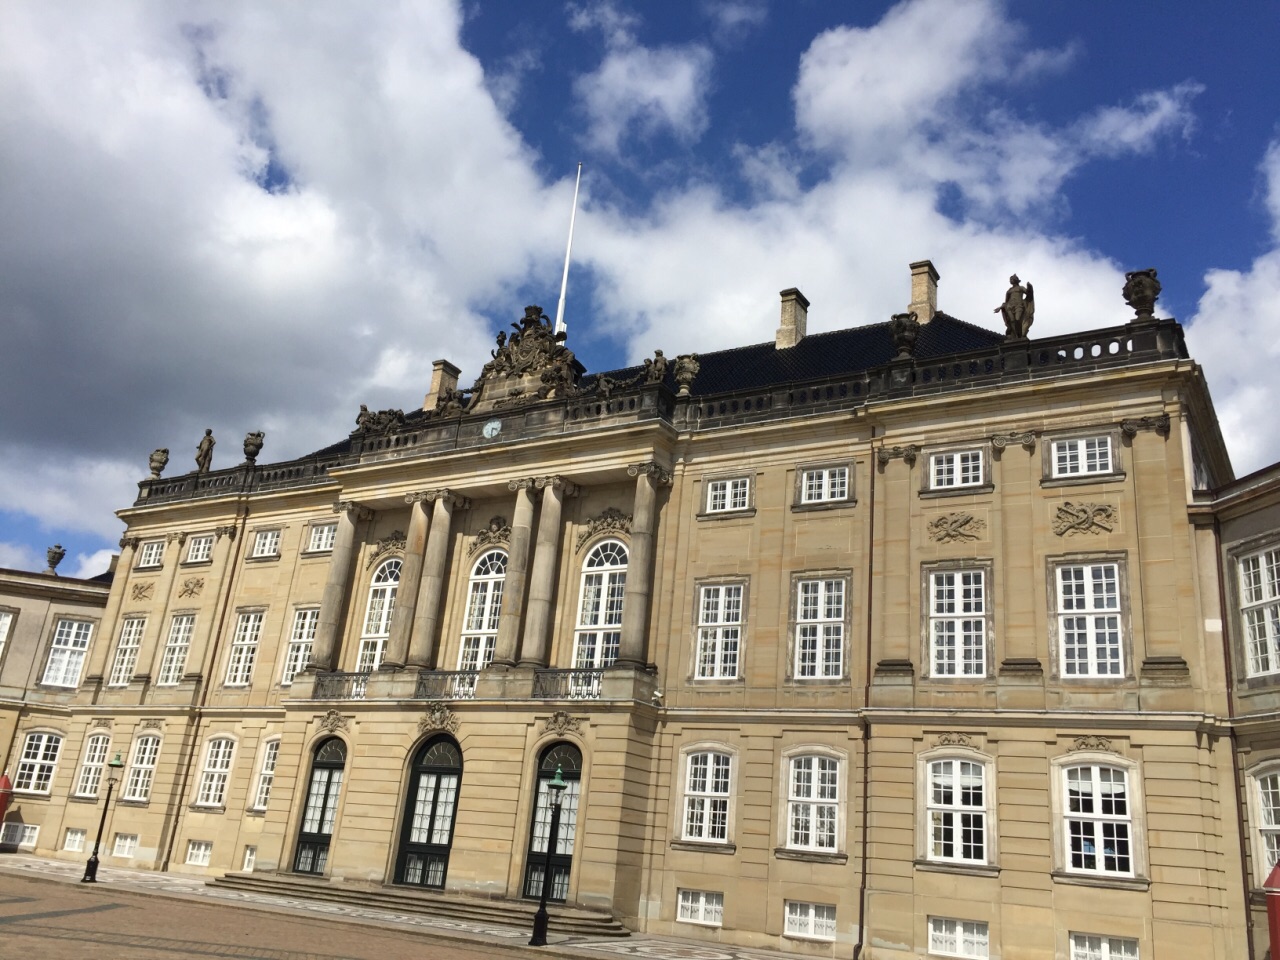 Jaegerspris宫殿， Frederikssund，丹麦 库存图片 - 图片 包括有 城堡, 住宅: 32626601